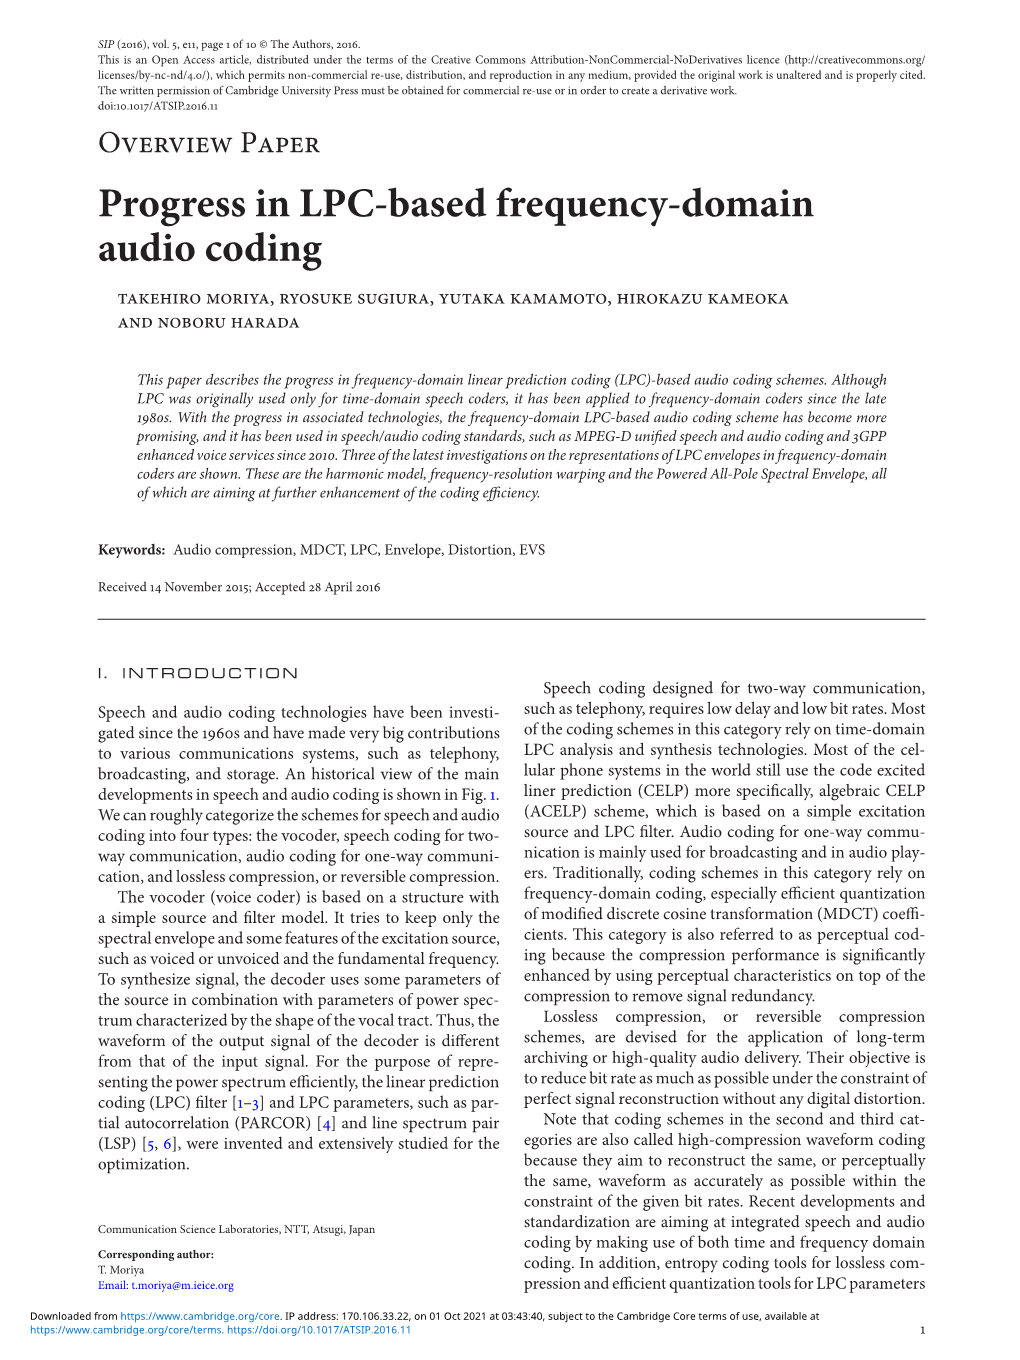 Progress in LPC-Based Frequency-Domain Audio Coding Takehiro Moriya, Ryosuke Sugiura, Yutaka Kamamoto, Hirokazu Kameoka and Noboru Harada